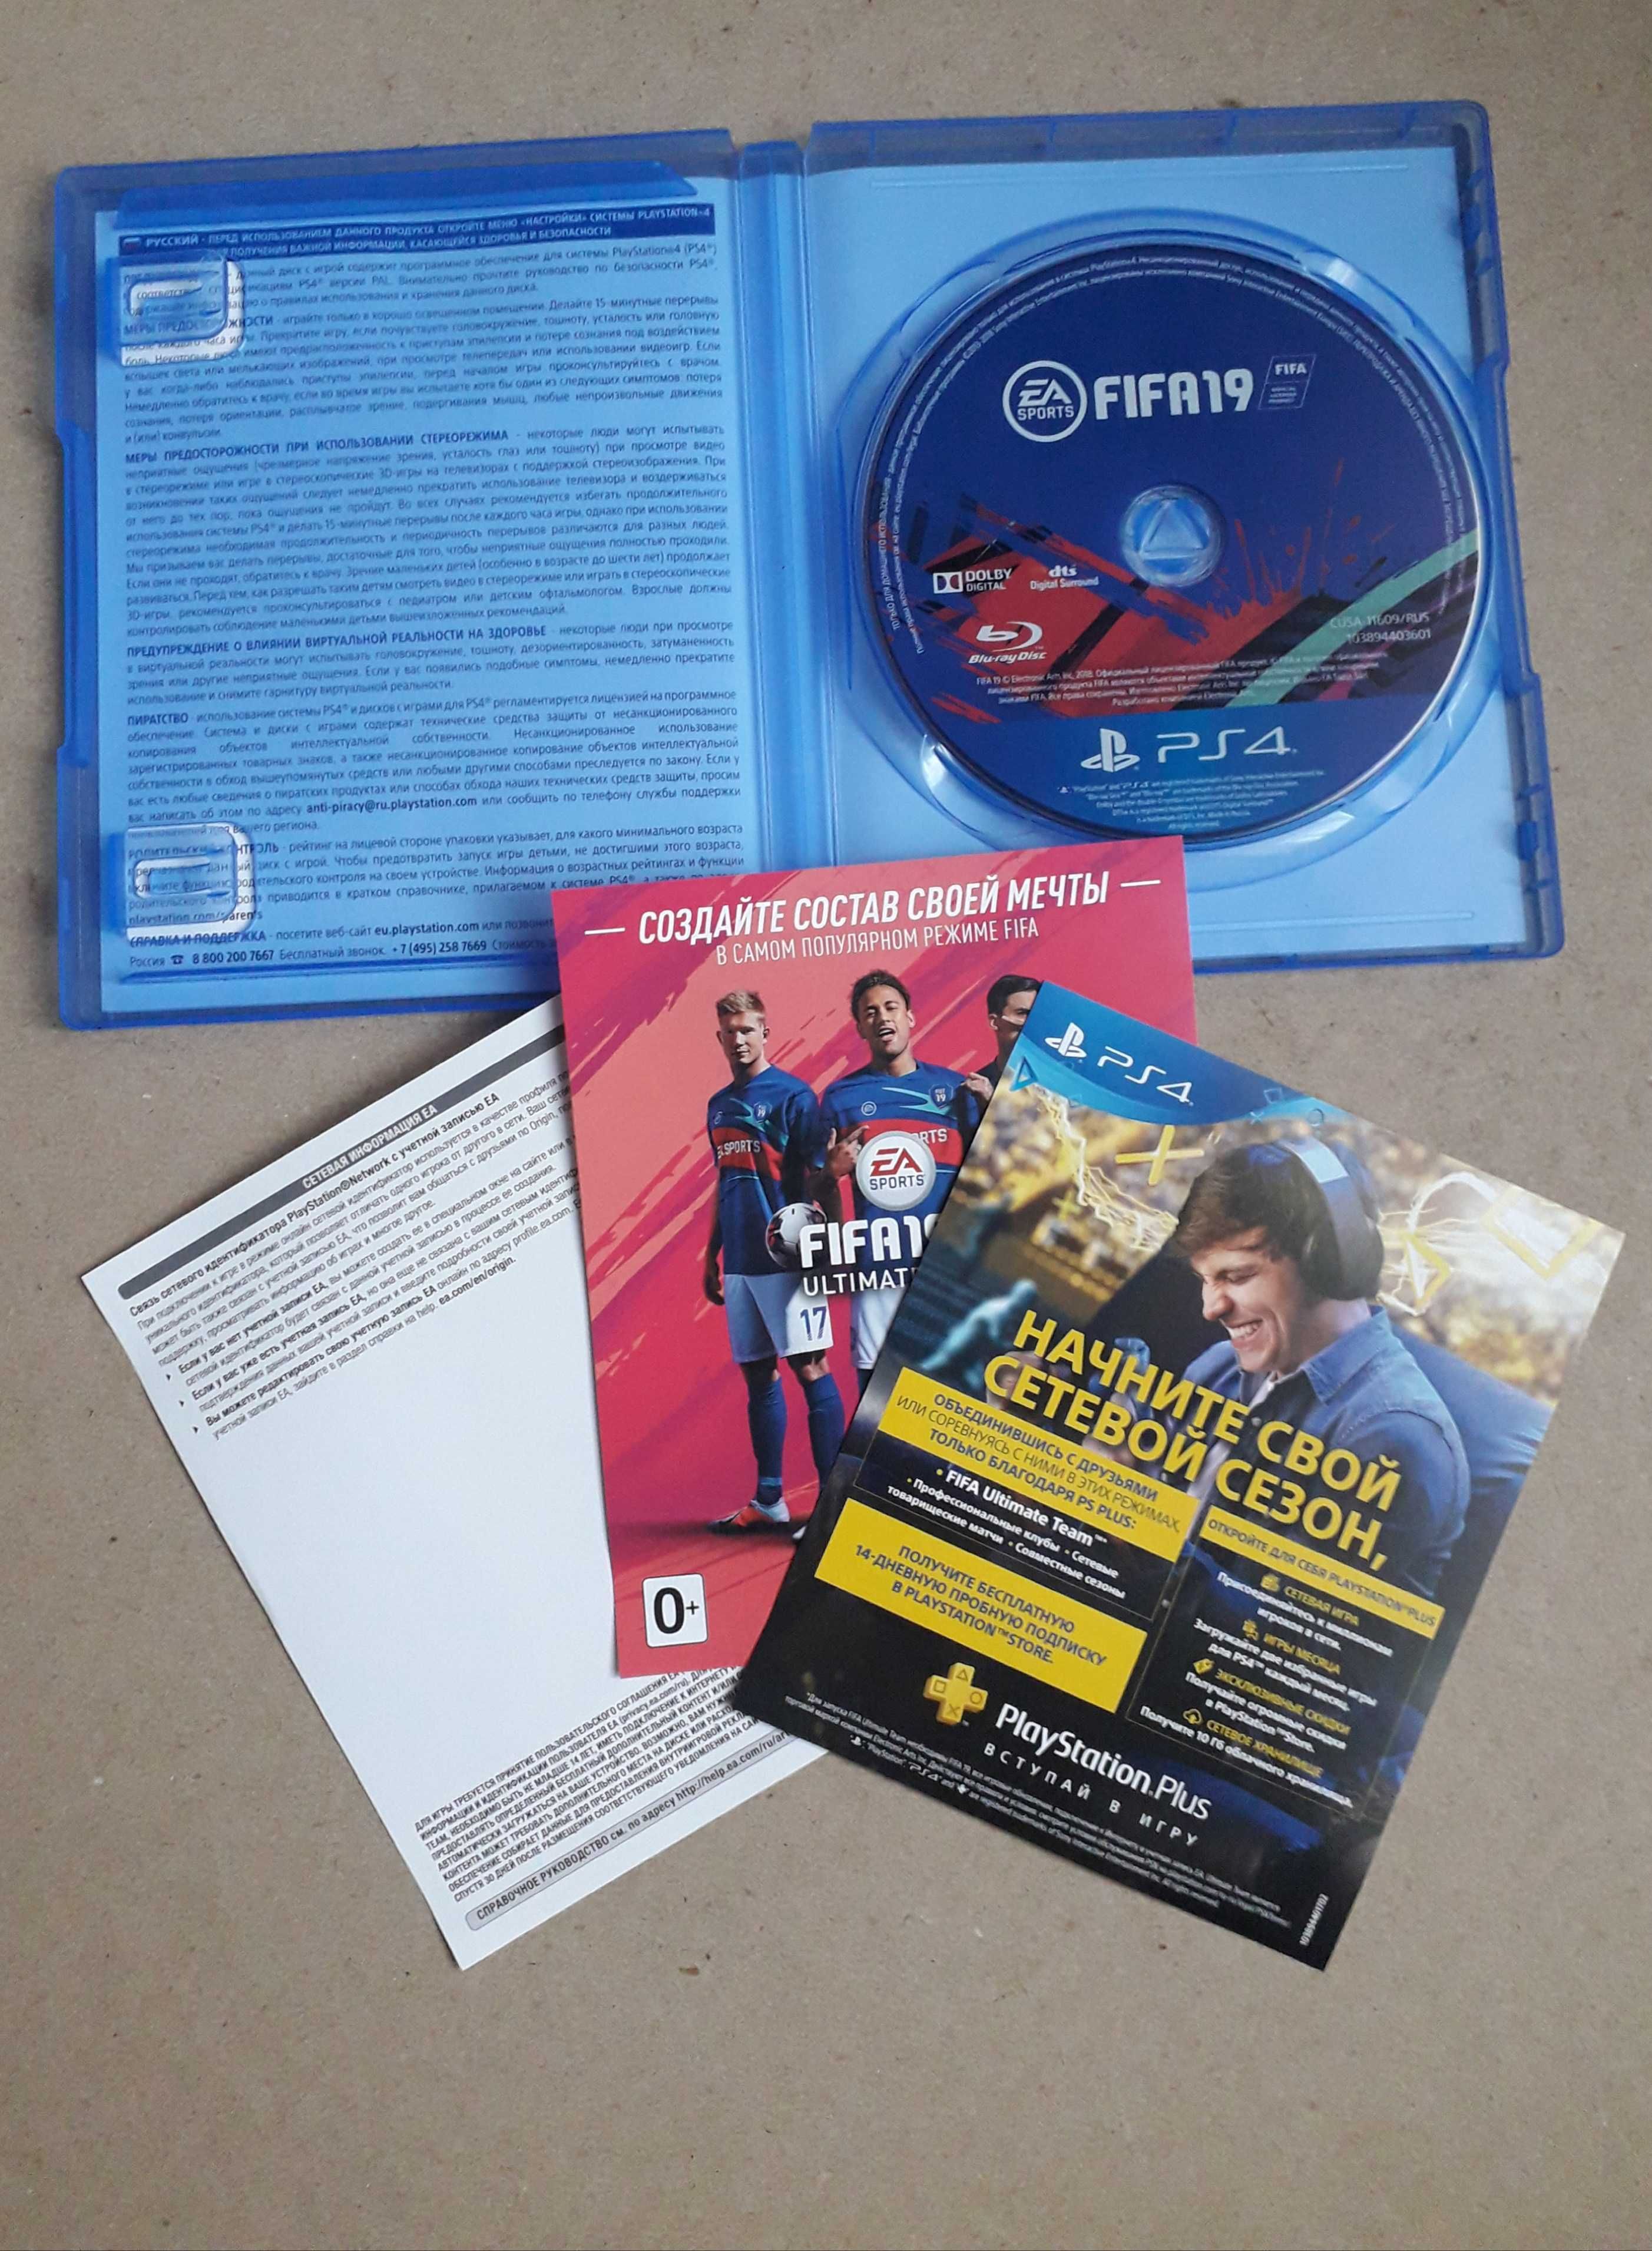 PSP 4, игра футбол на blue-ray диске, оригинал/лицензия